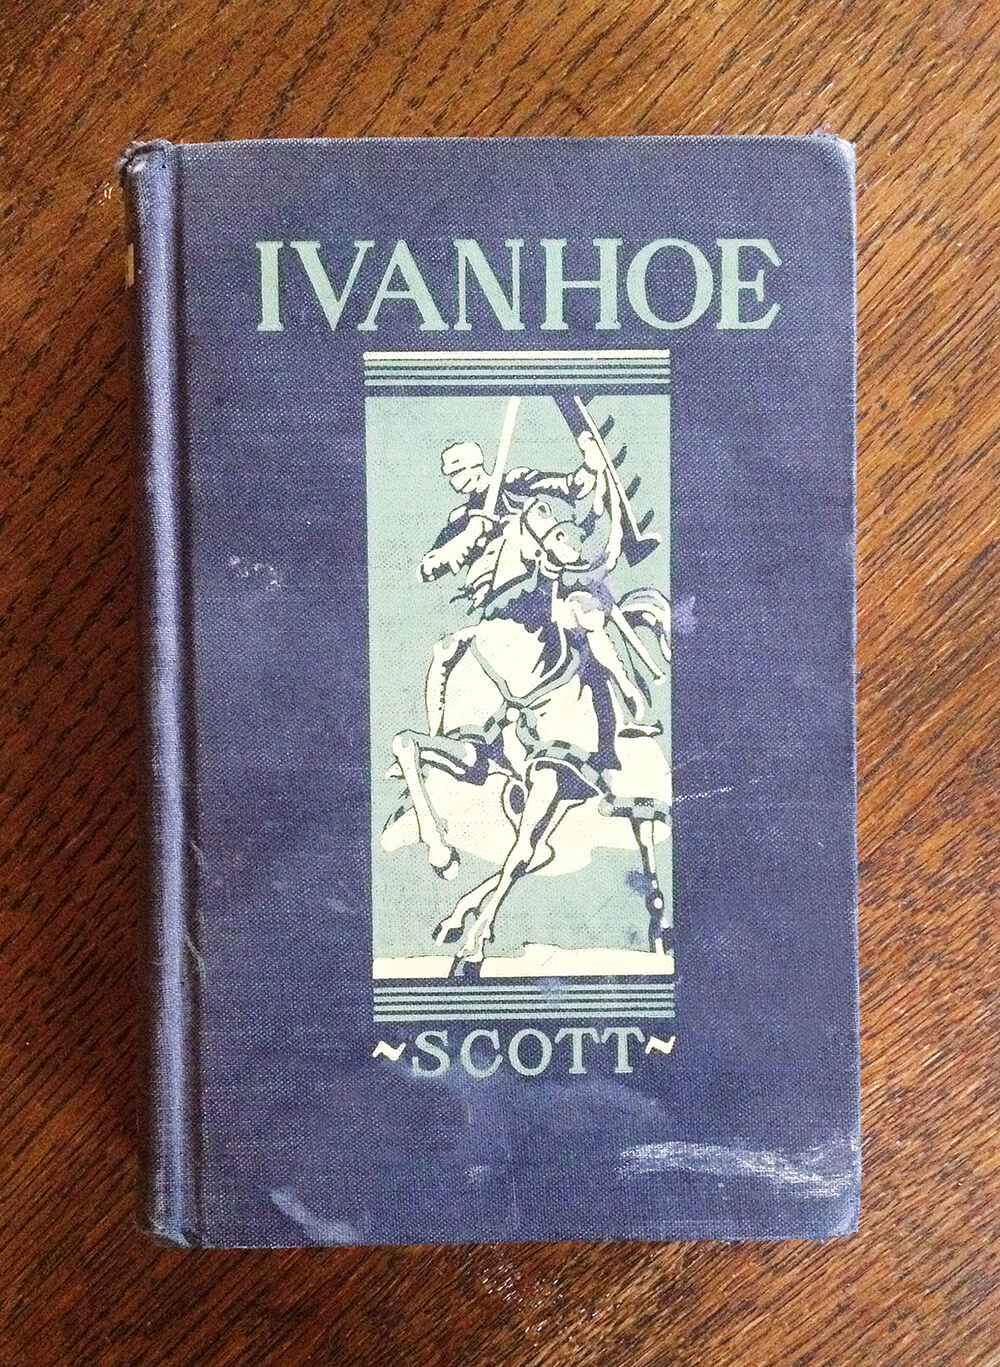 Ivanhoe, an old friend